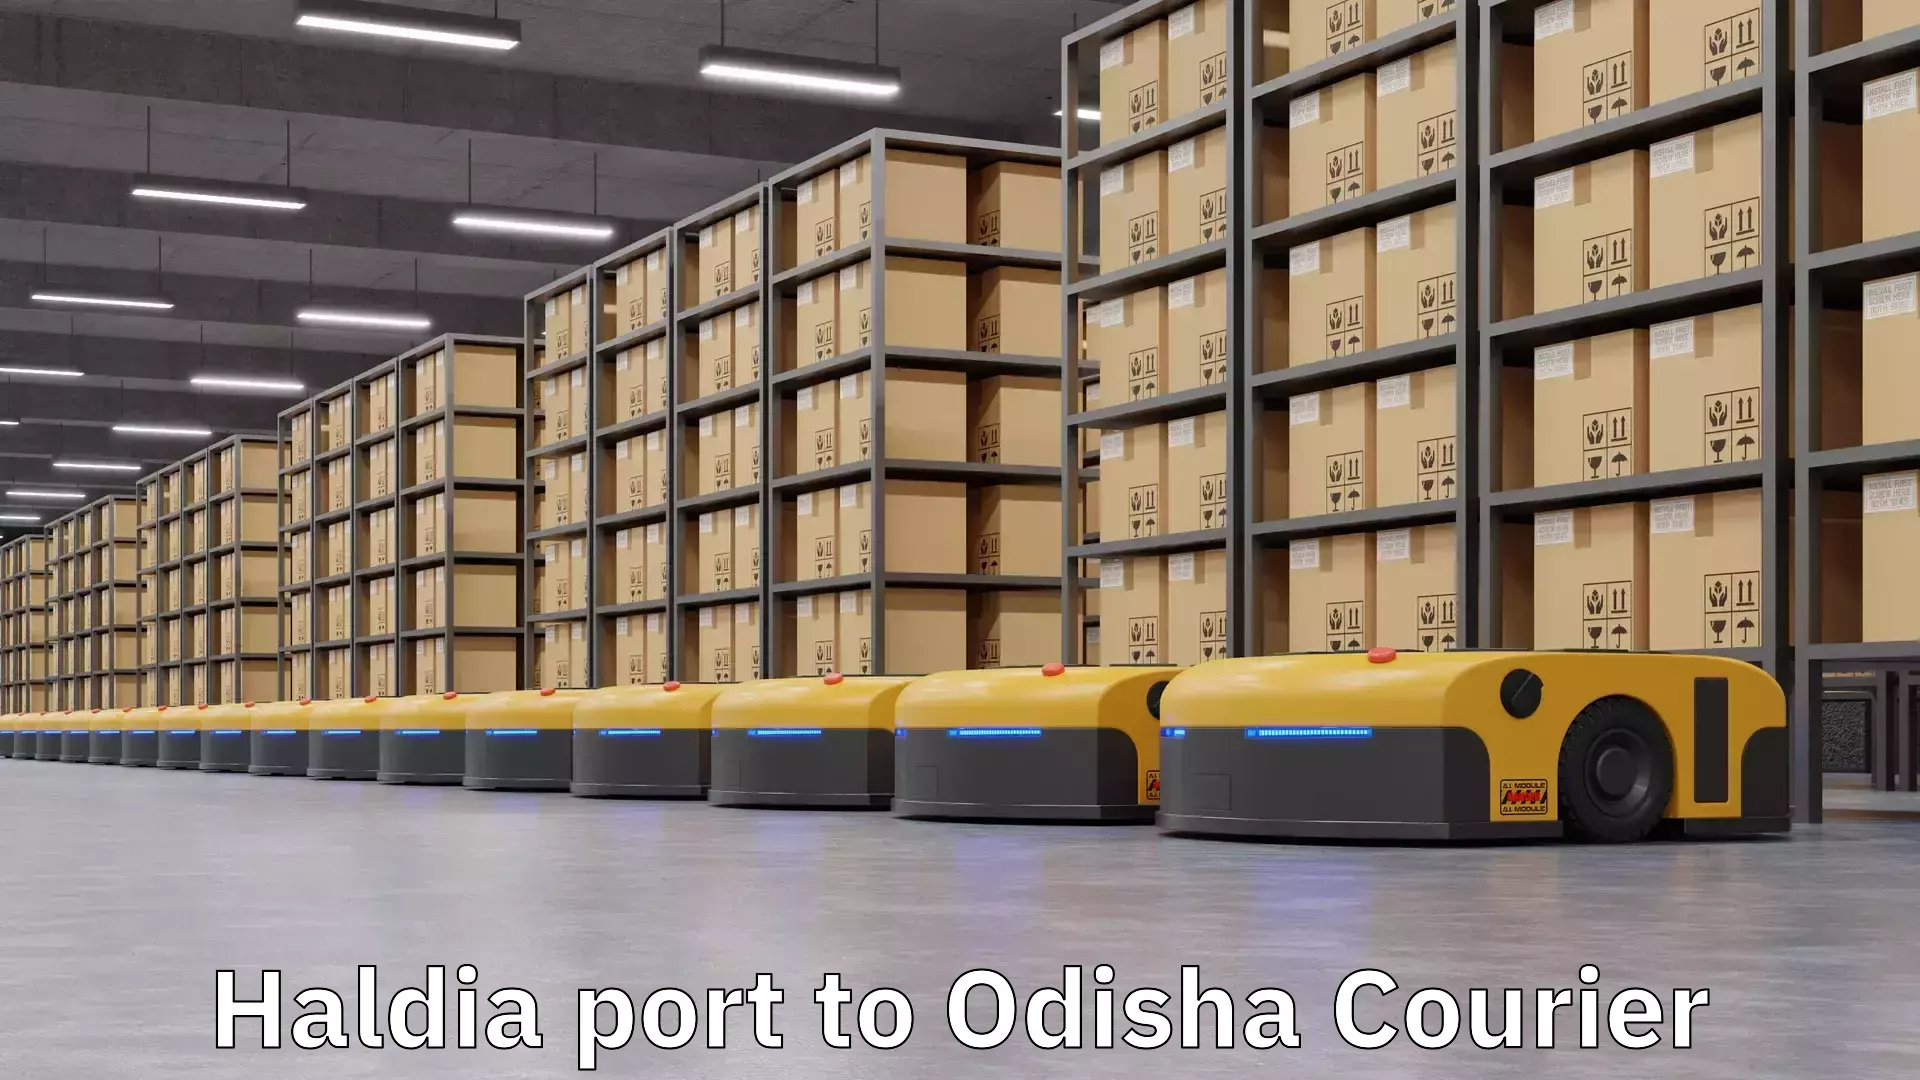 Affordable parcel service Haldia port to Odisha